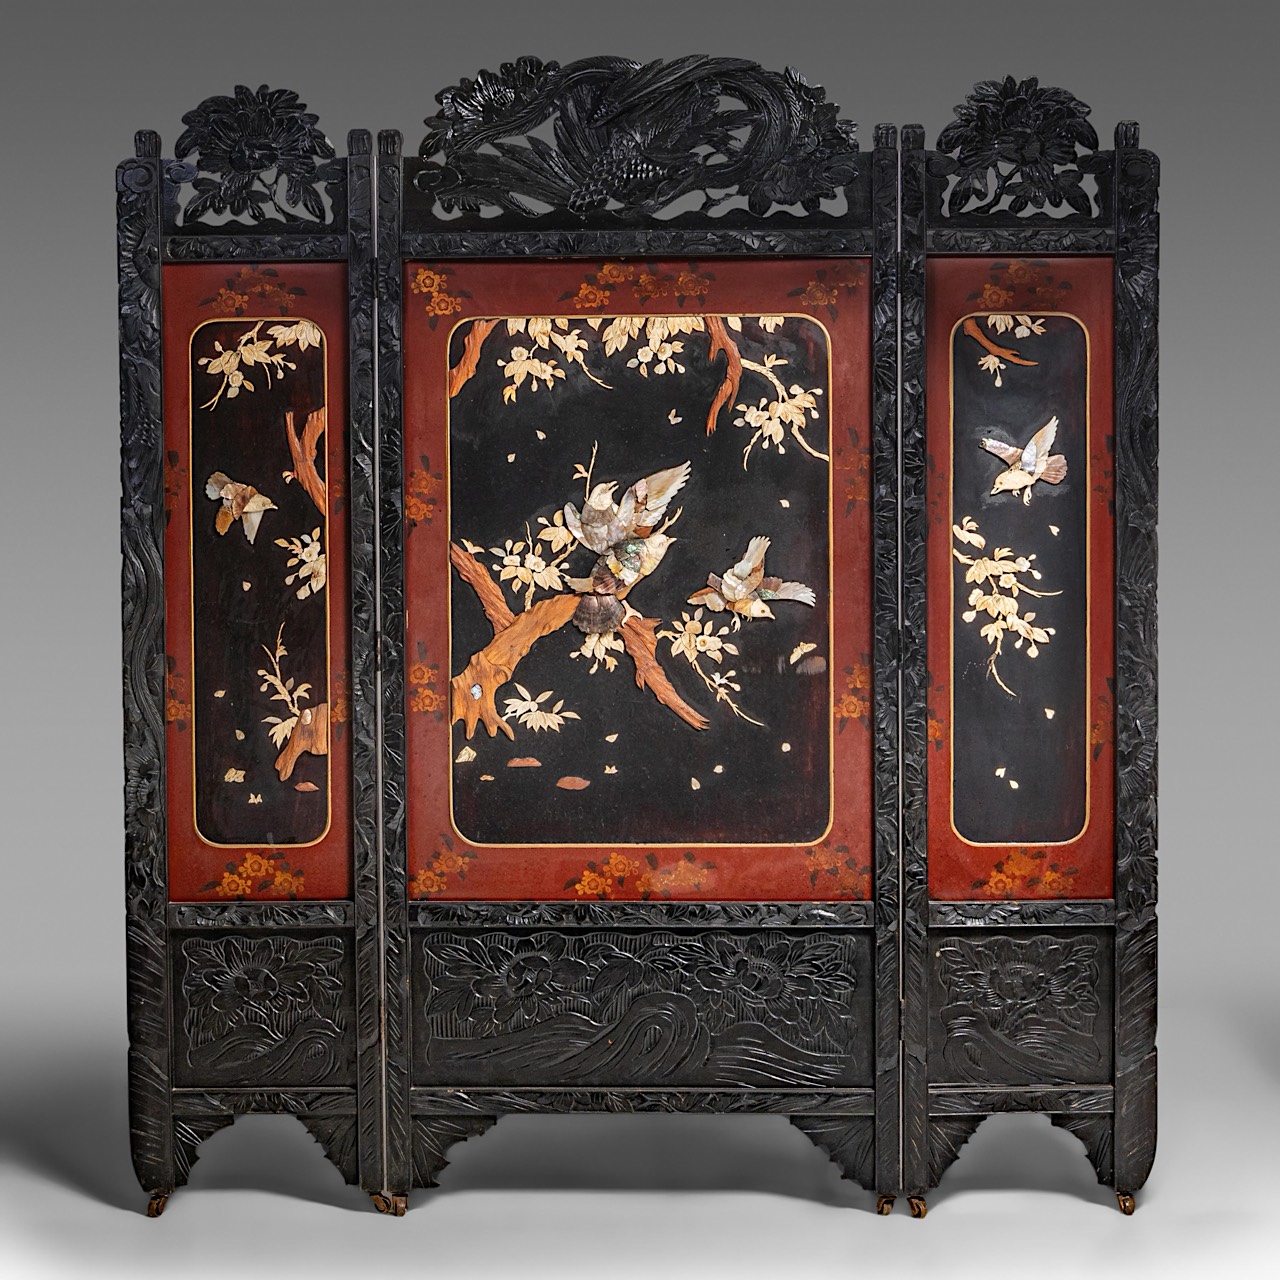 A Japanese Shibayama three-fold chamber screen, Taisho period (1912-1926), Total H 181 cm - W 160 cm